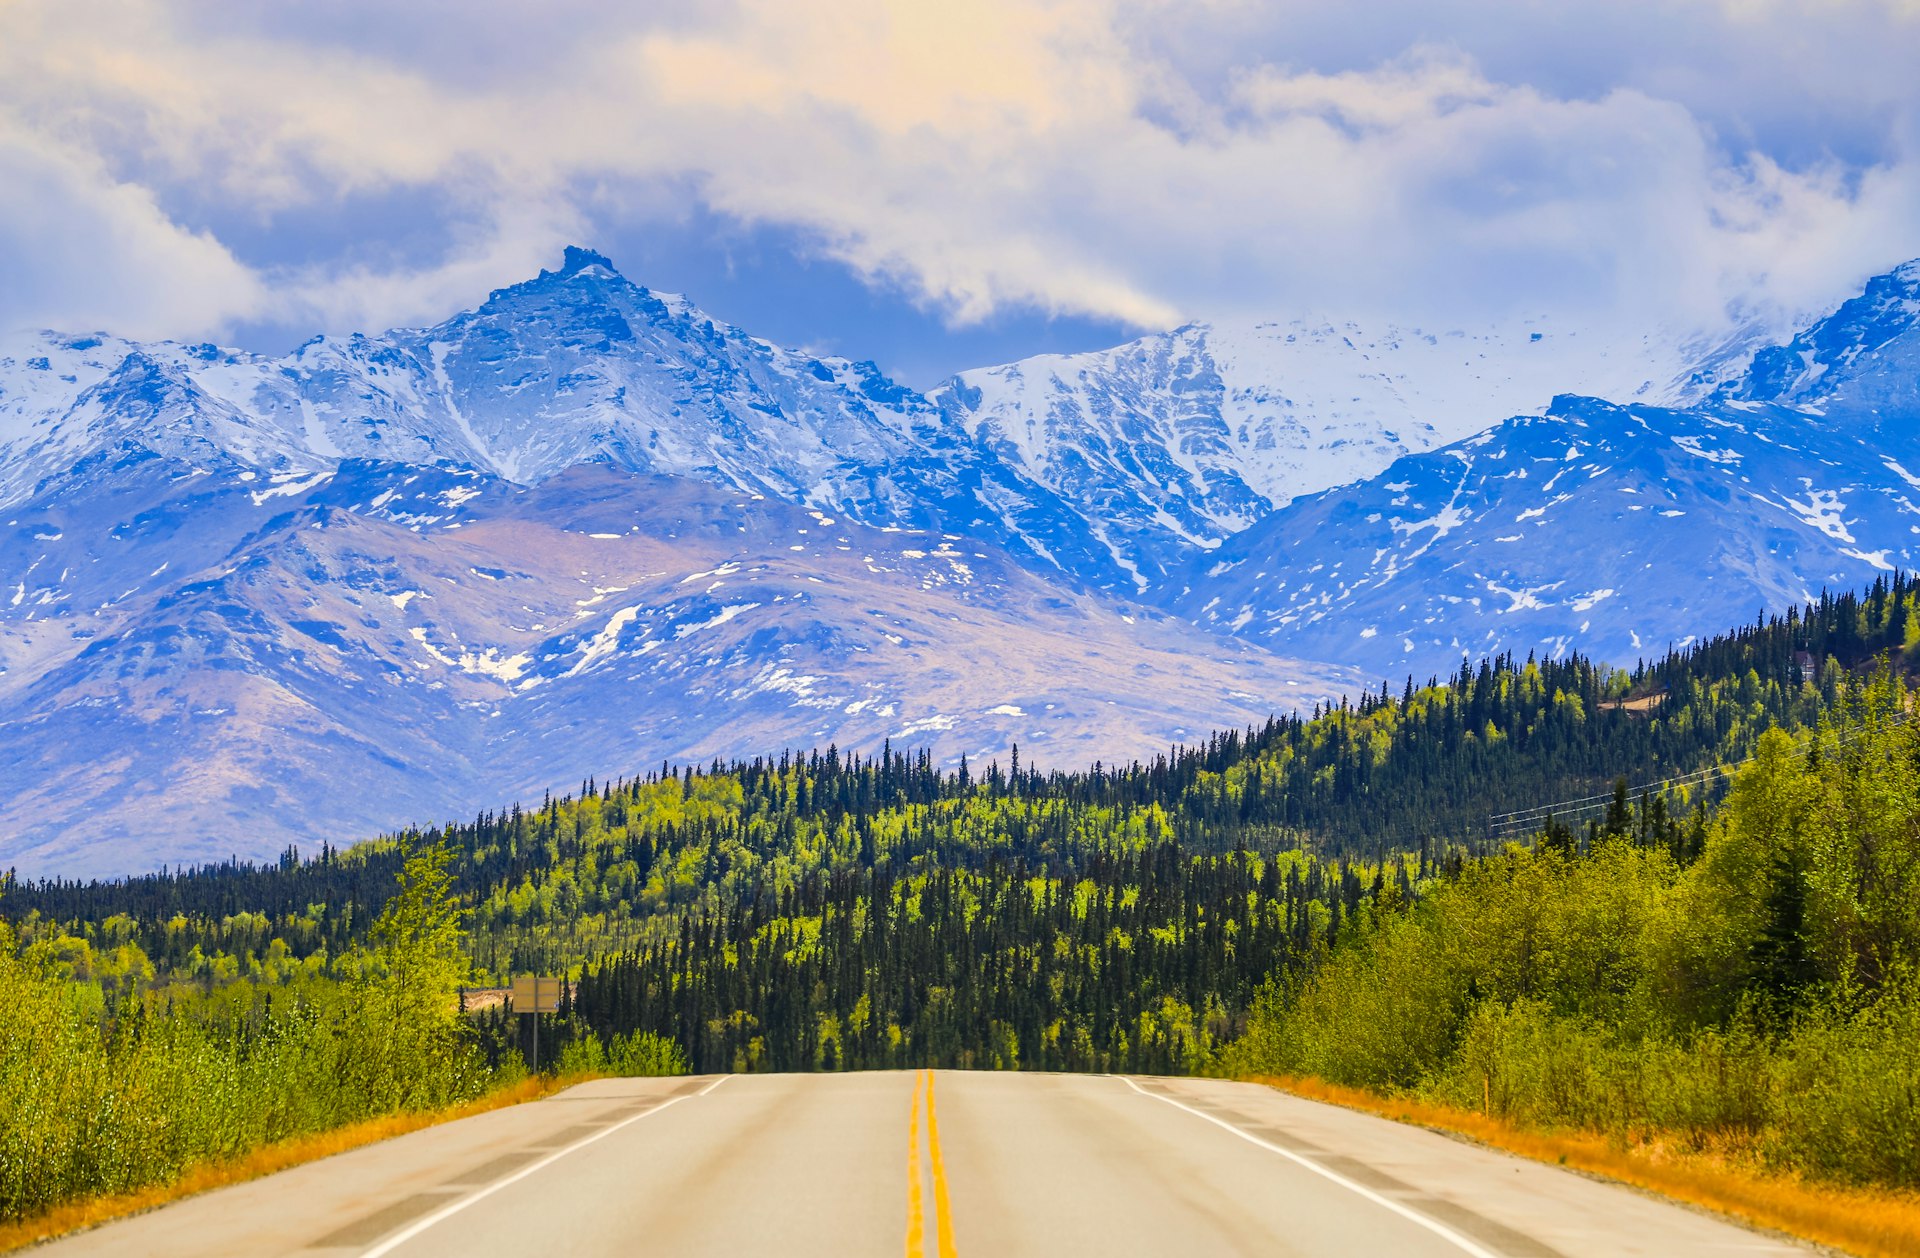 George Parks Highway into Denali National Park